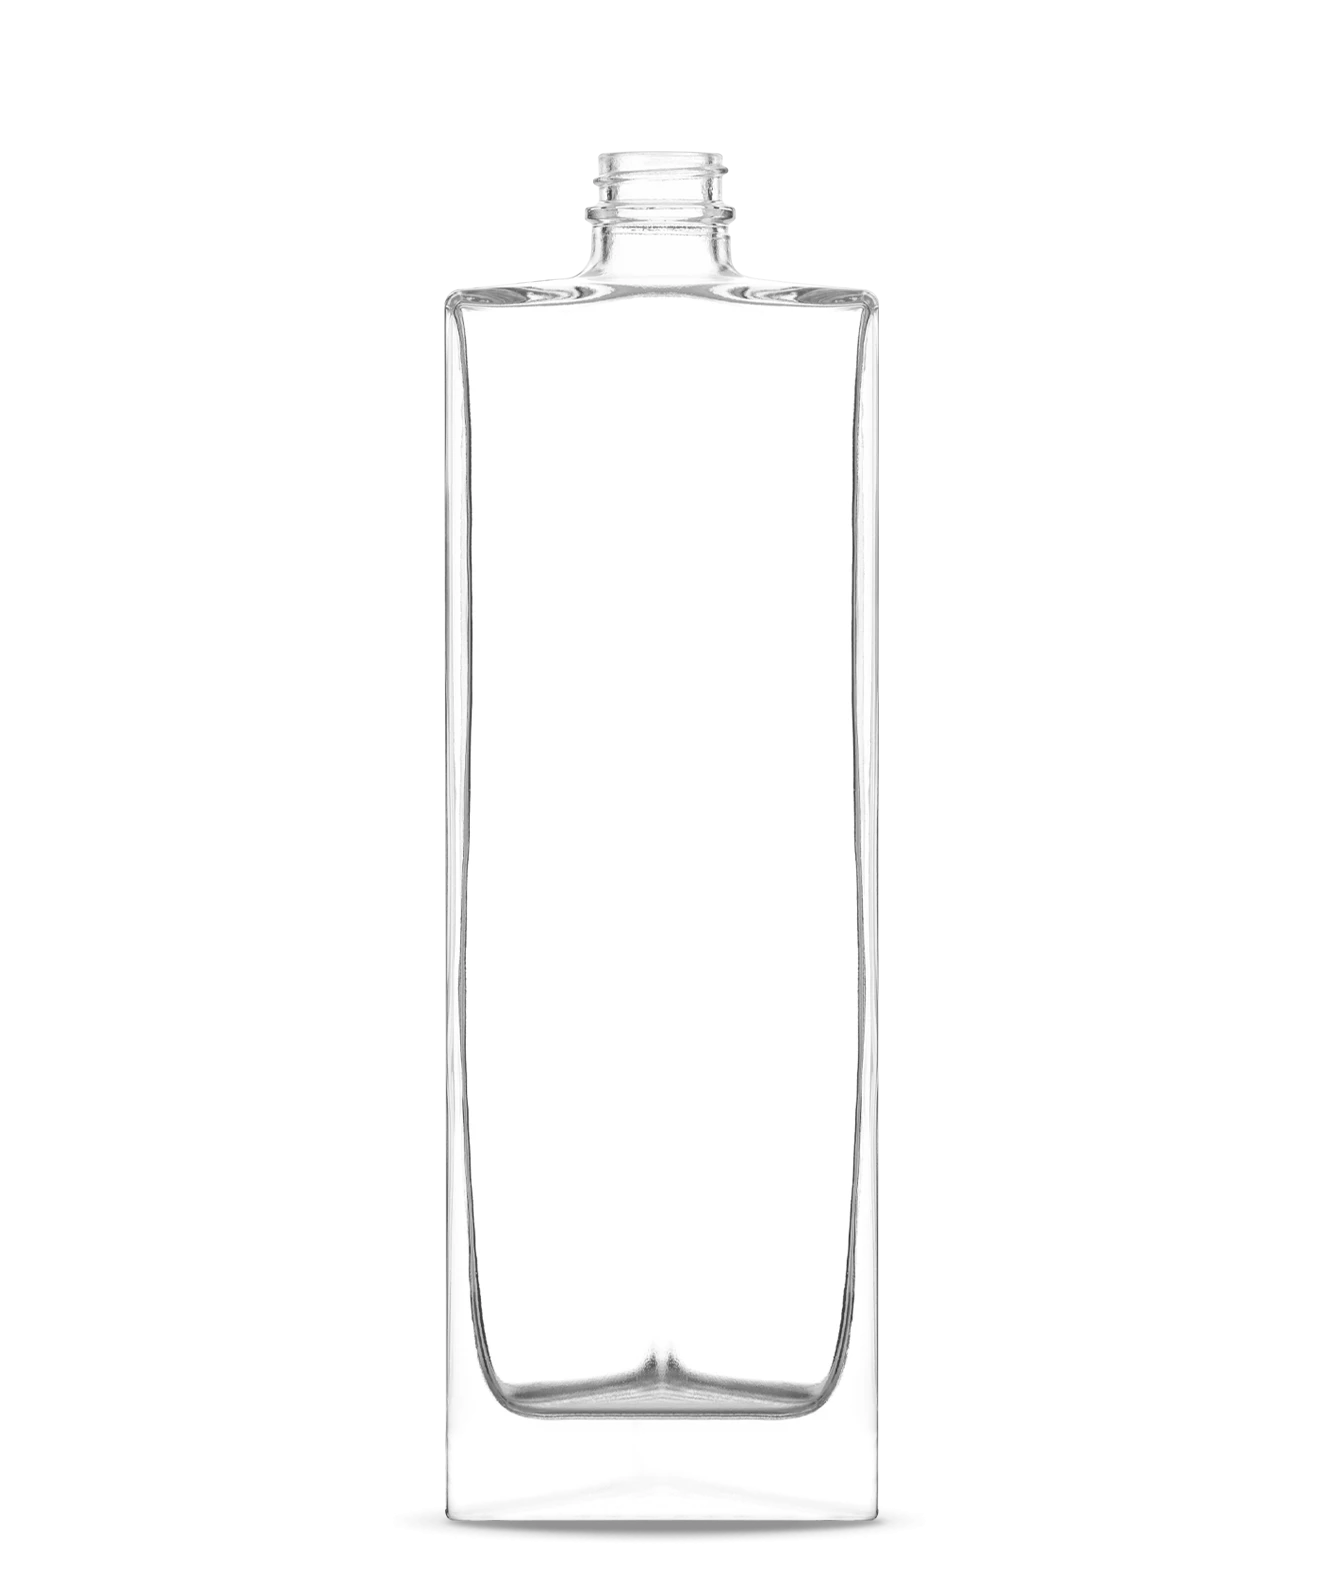 GIADA Archive Spirits bottles Vetroelite View 1